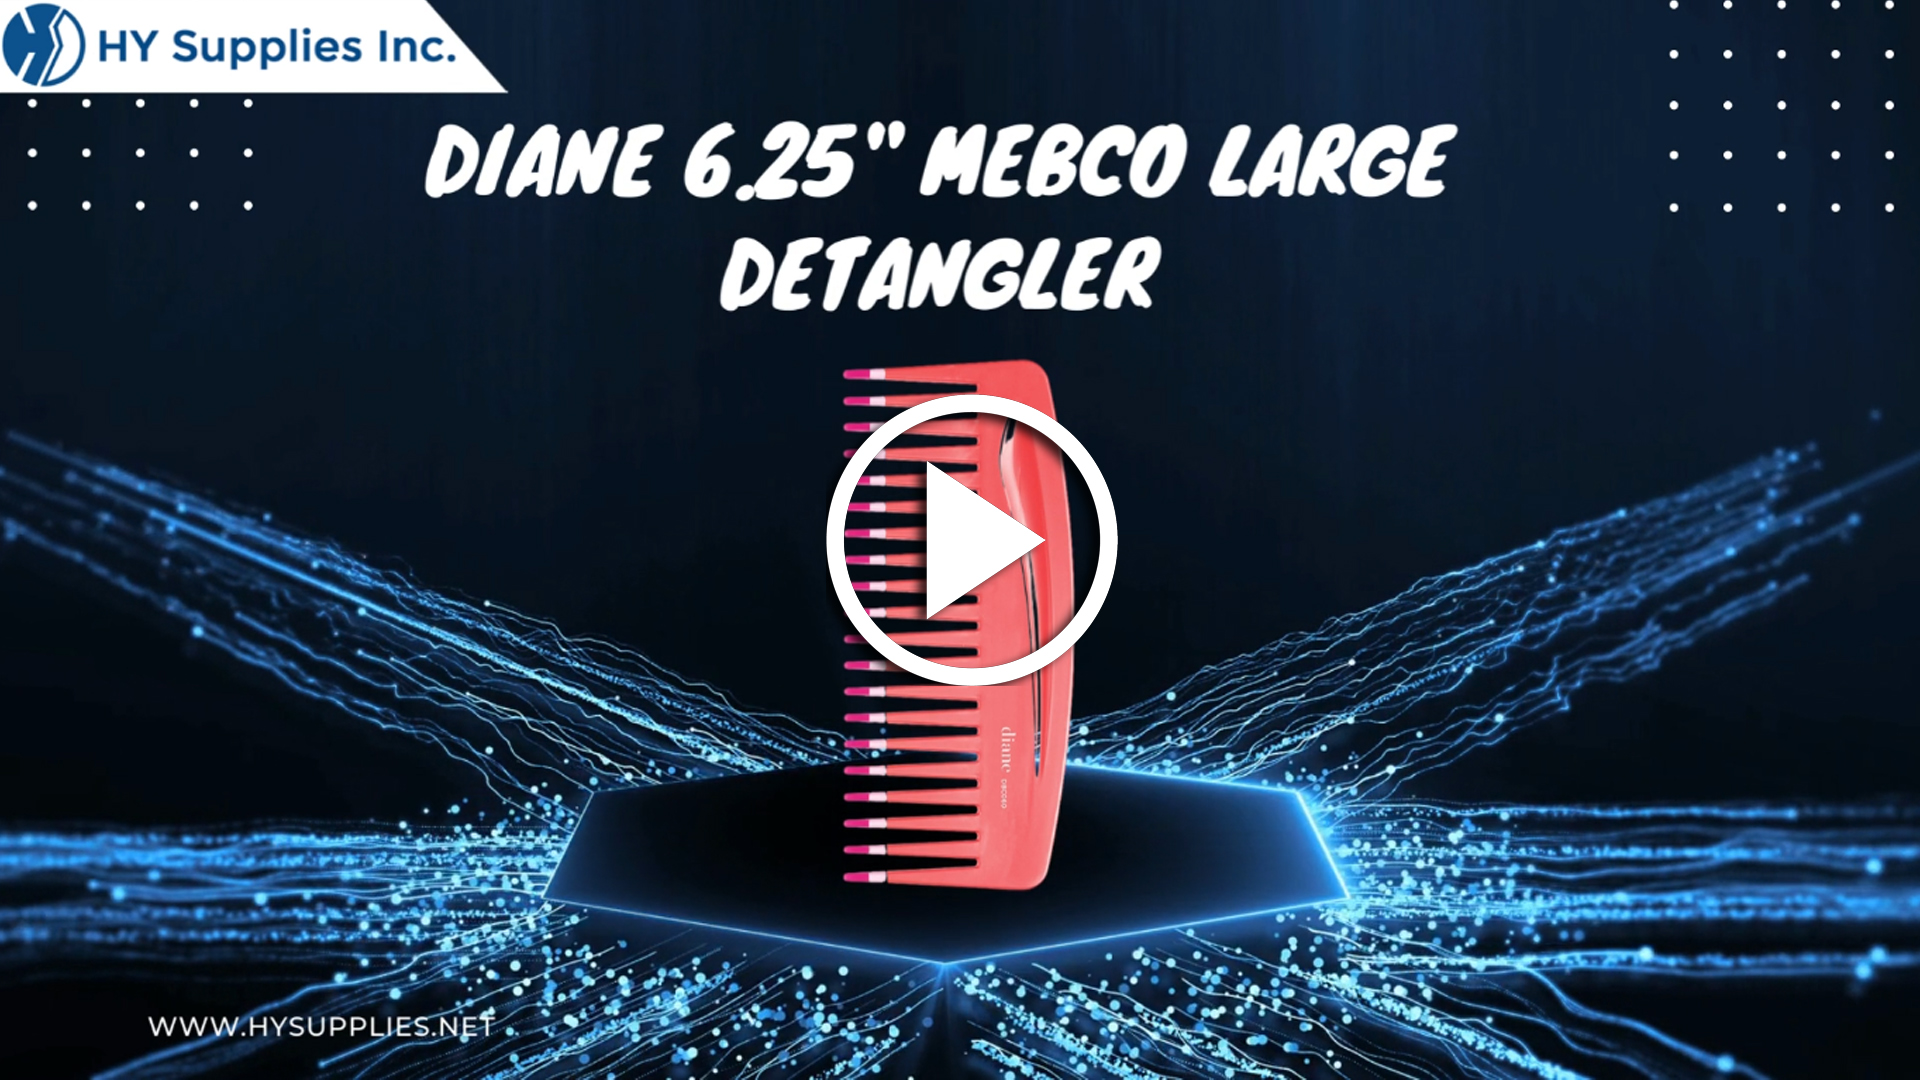 Diane 6.25"Mebco Large Detangler